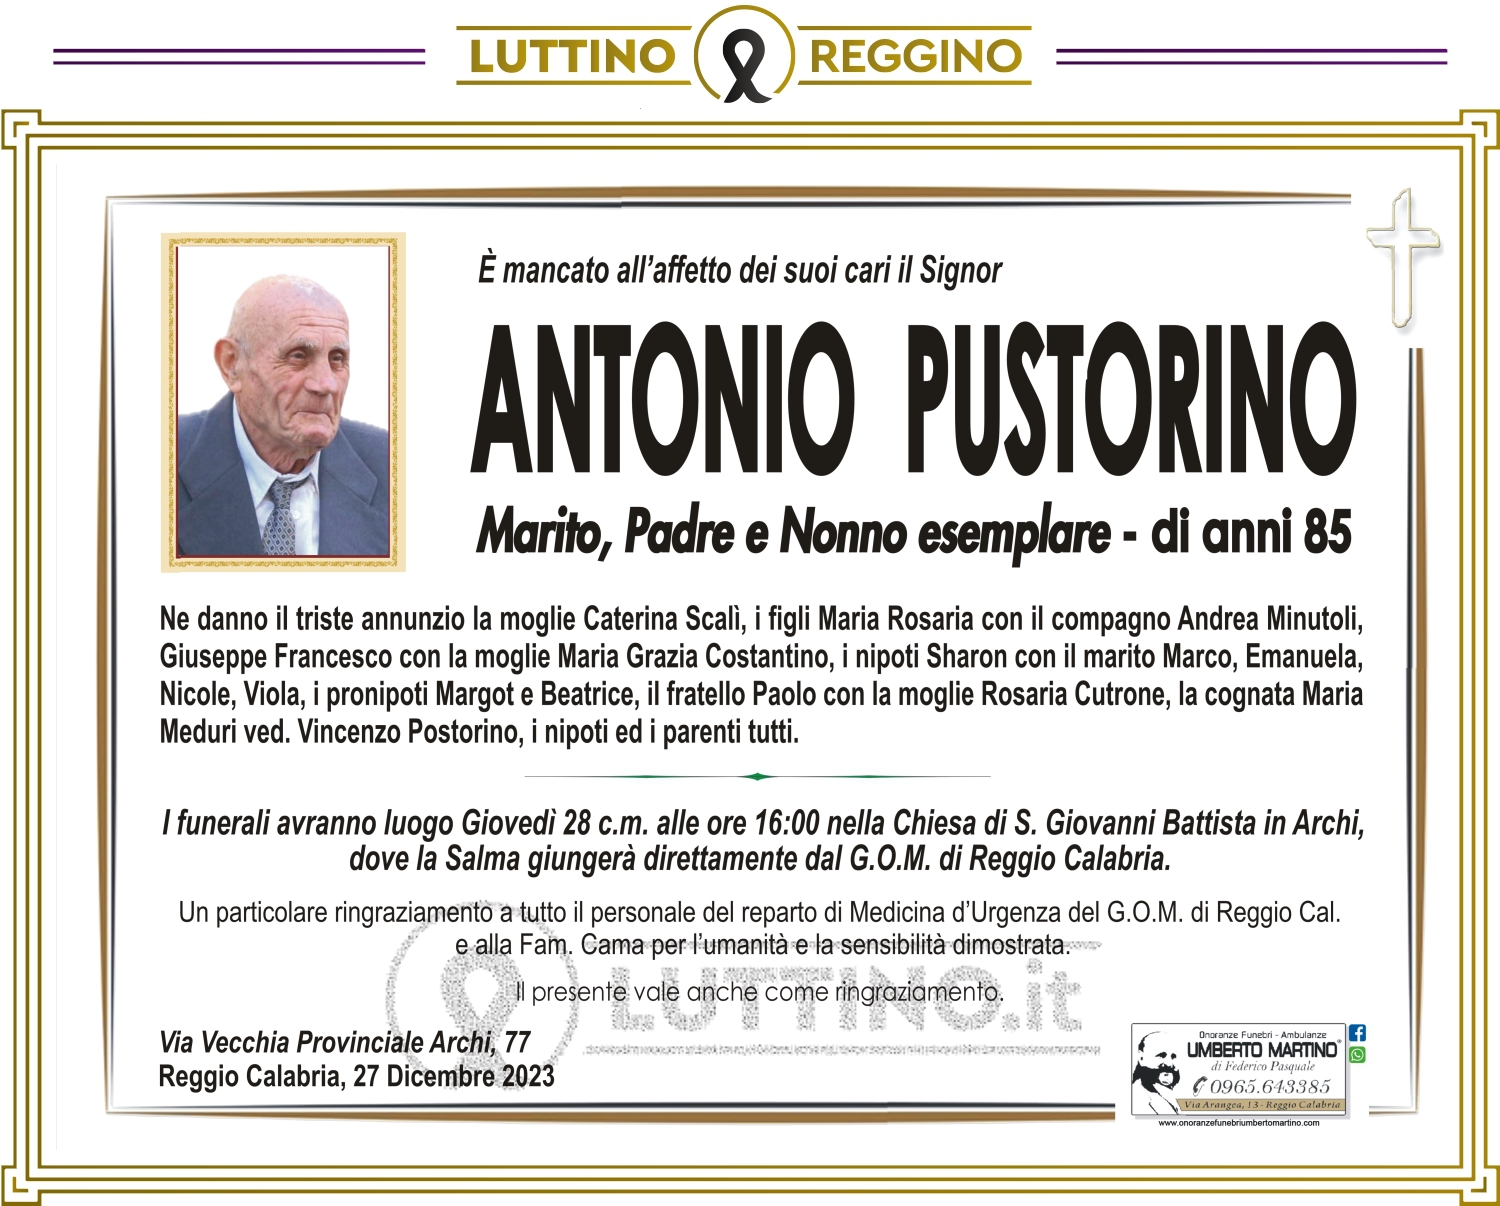 Antonio Pustorino